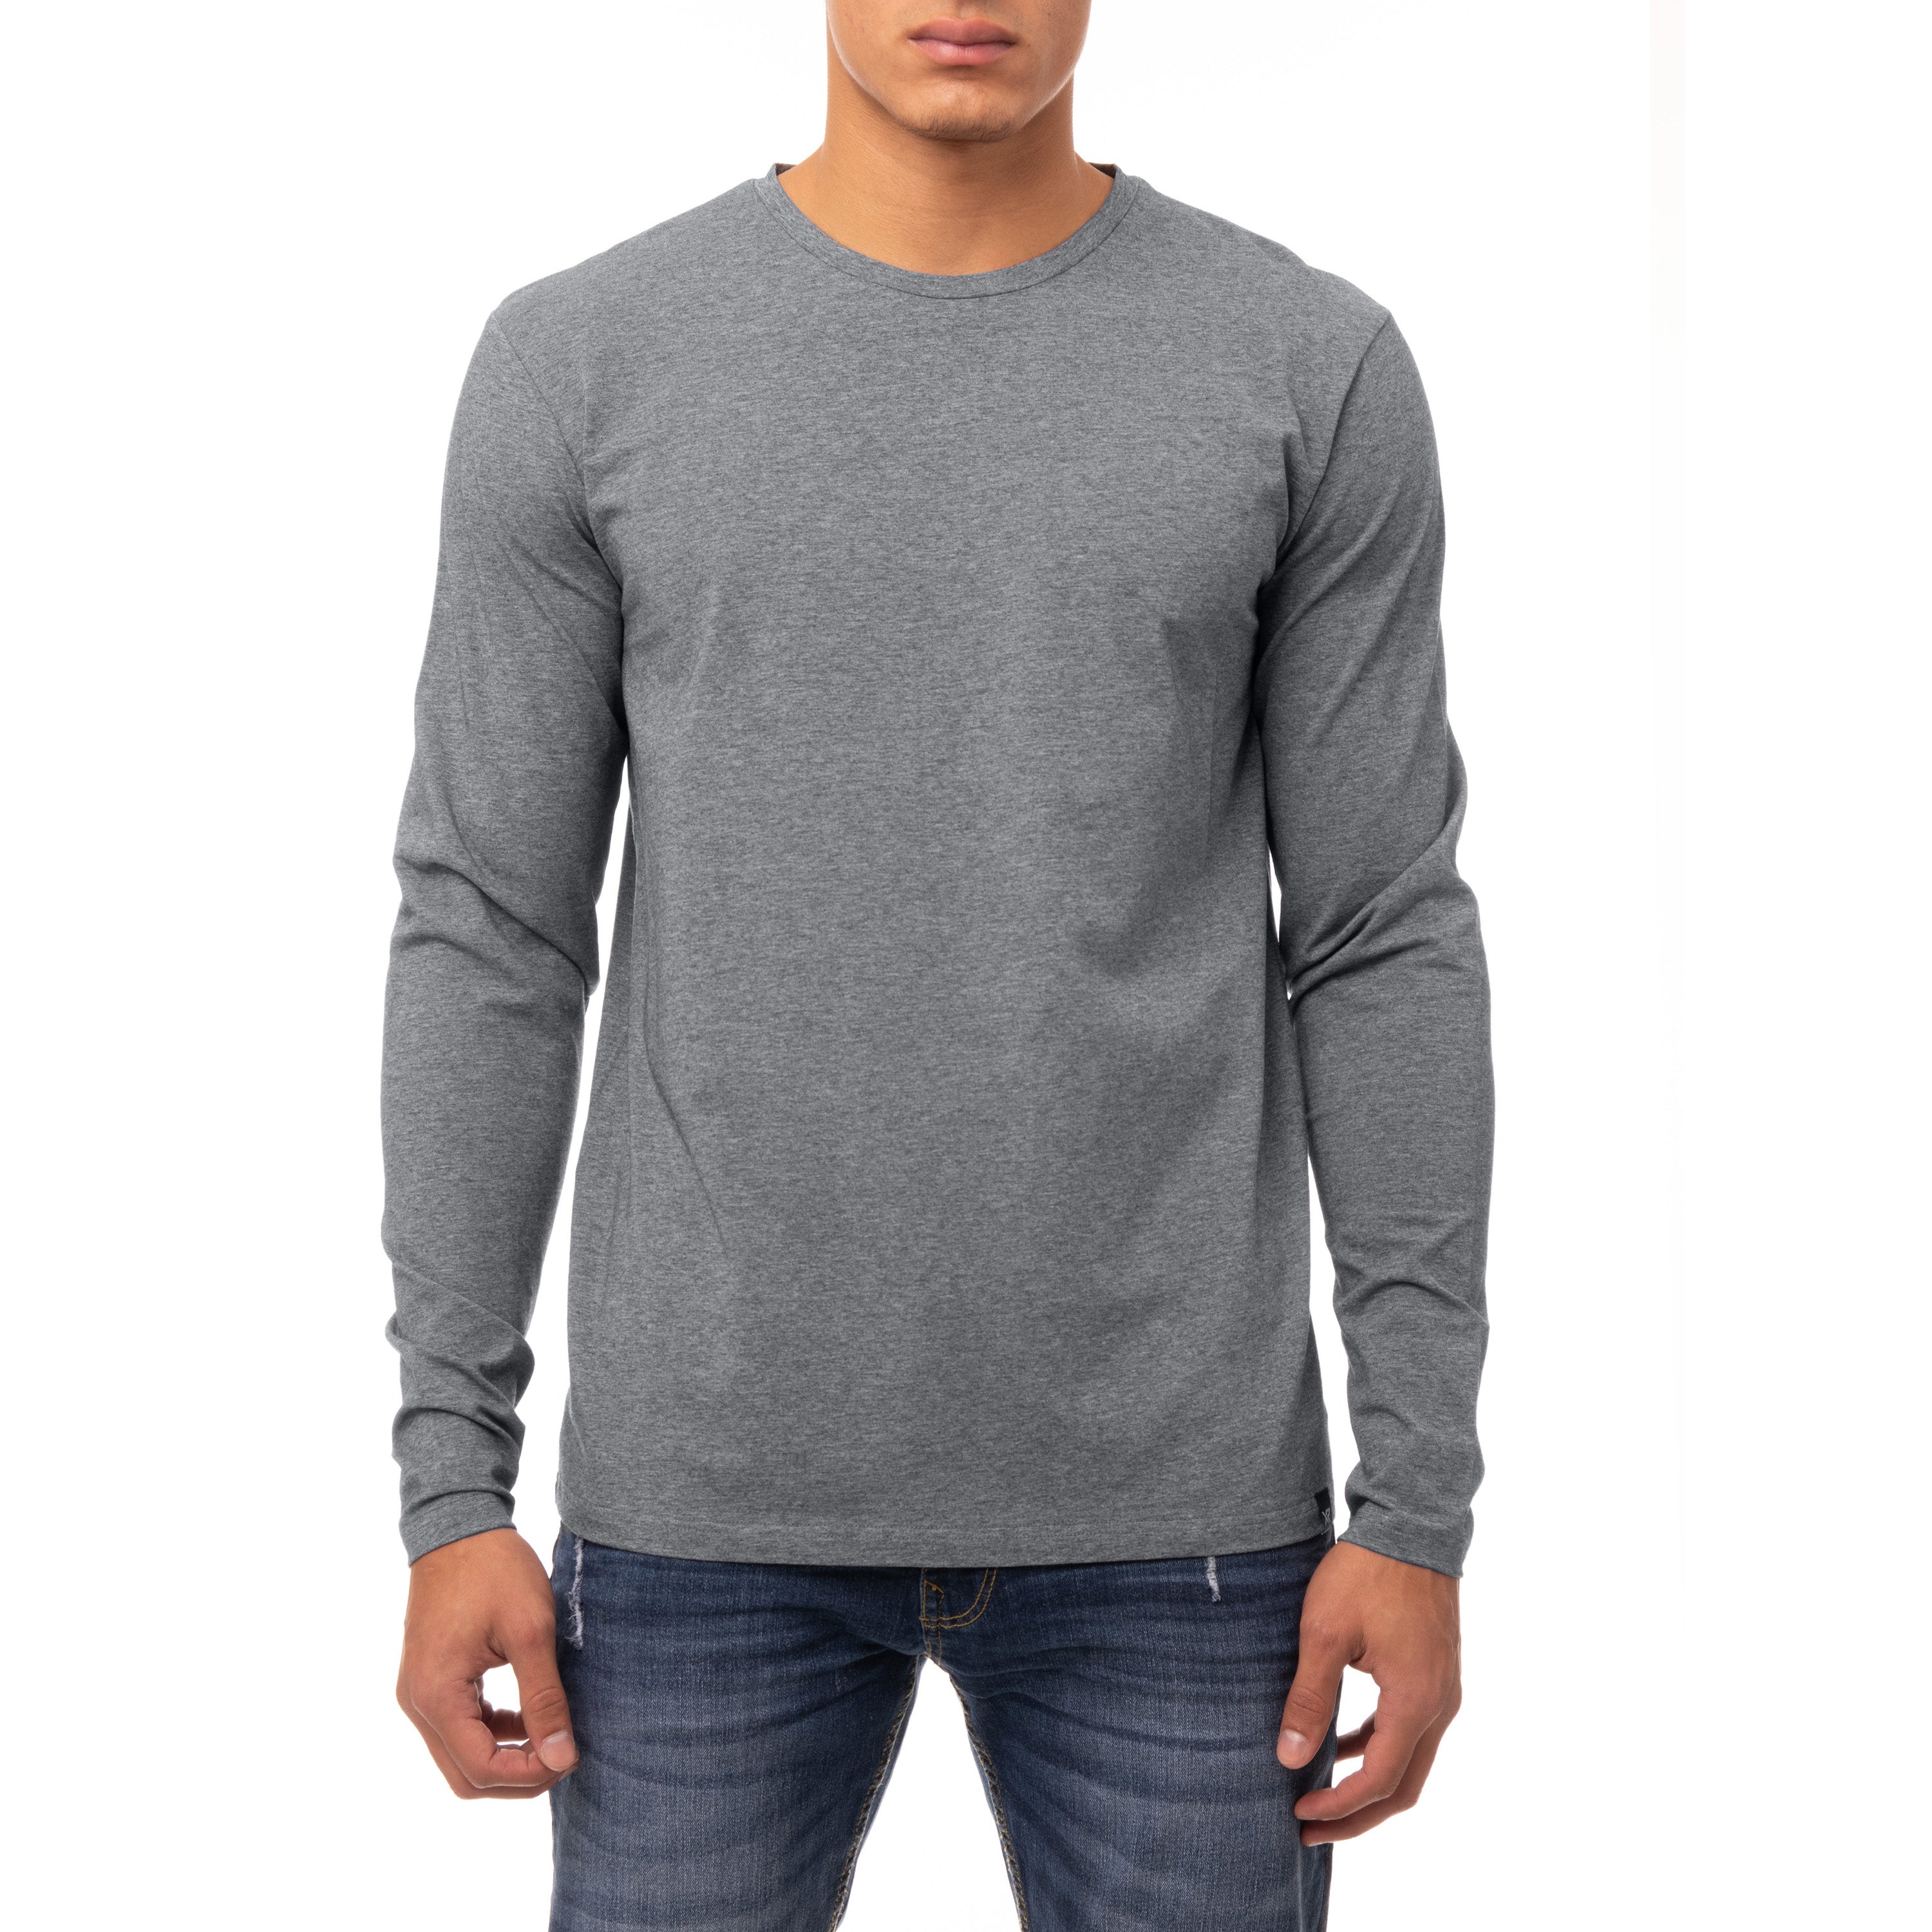 Shop Men's T-Shirts, Crewneck, Long Sleeve & More